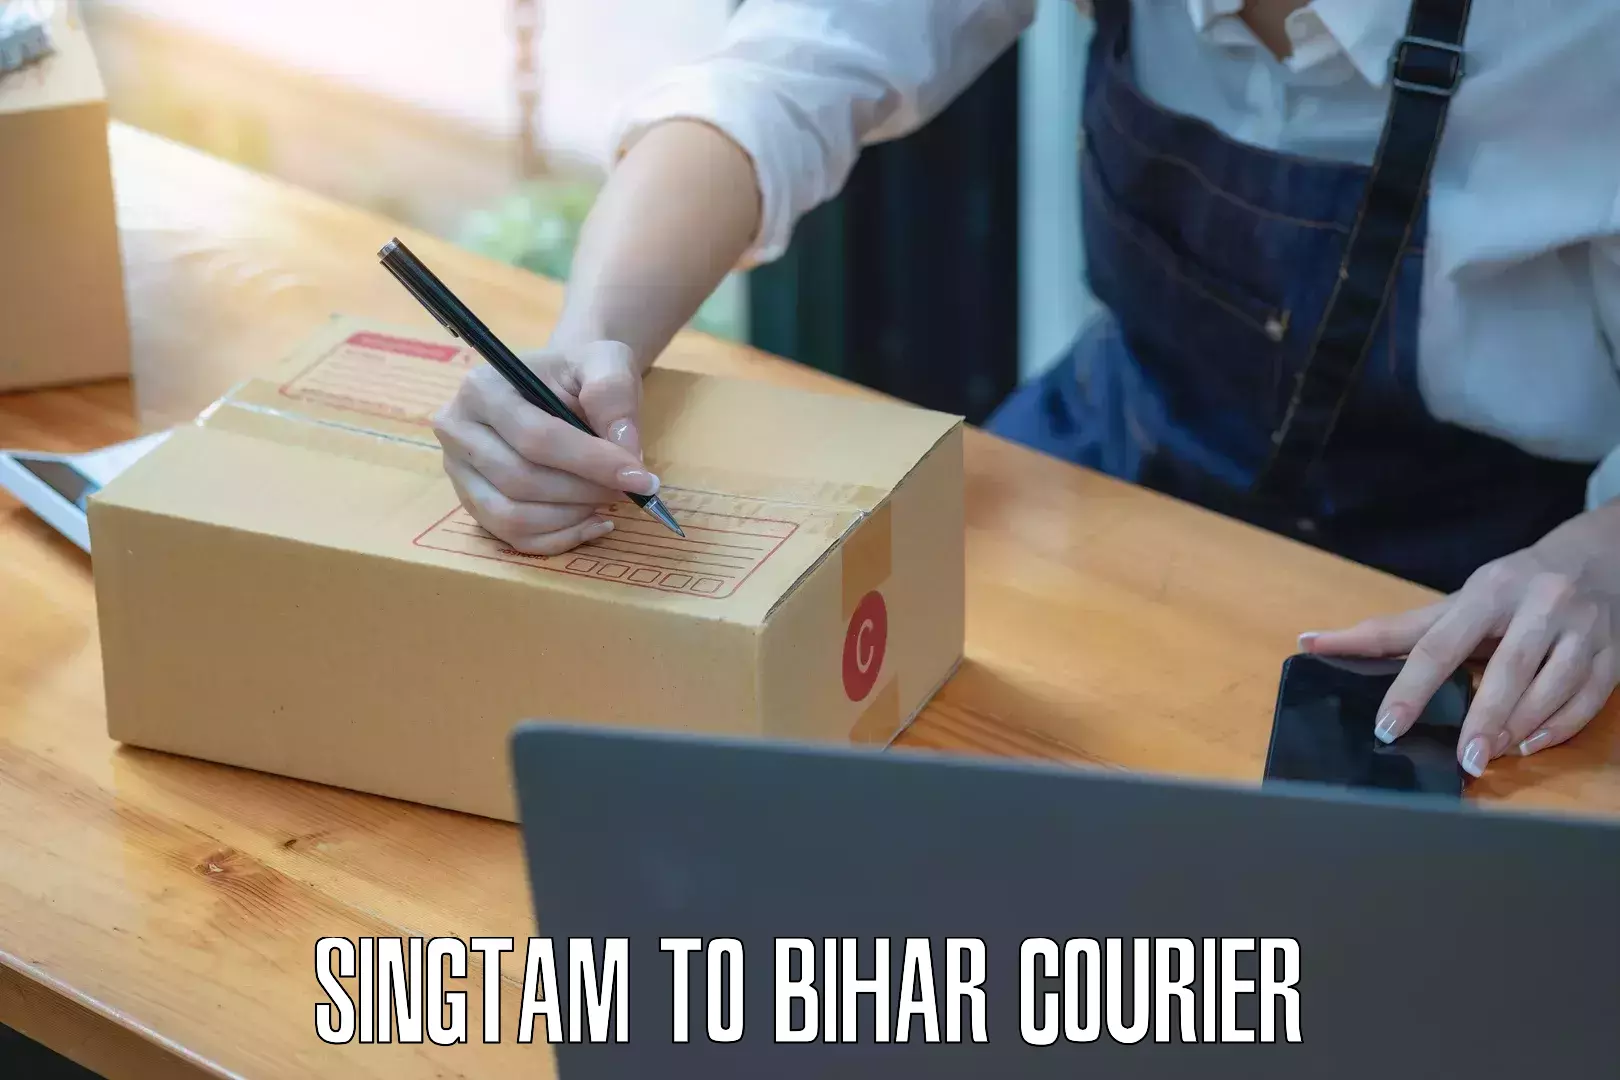 Nationwide courier service Singtam to Bihar